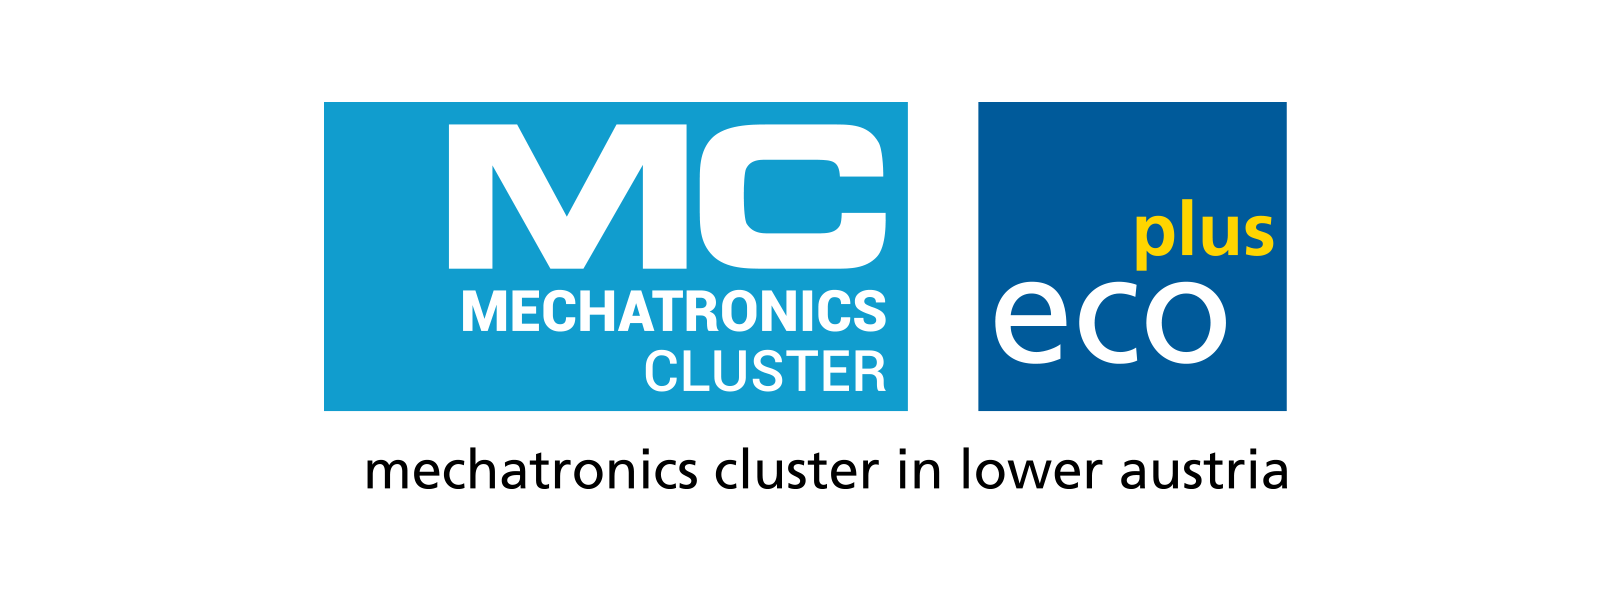 Mechatronik-Cluster